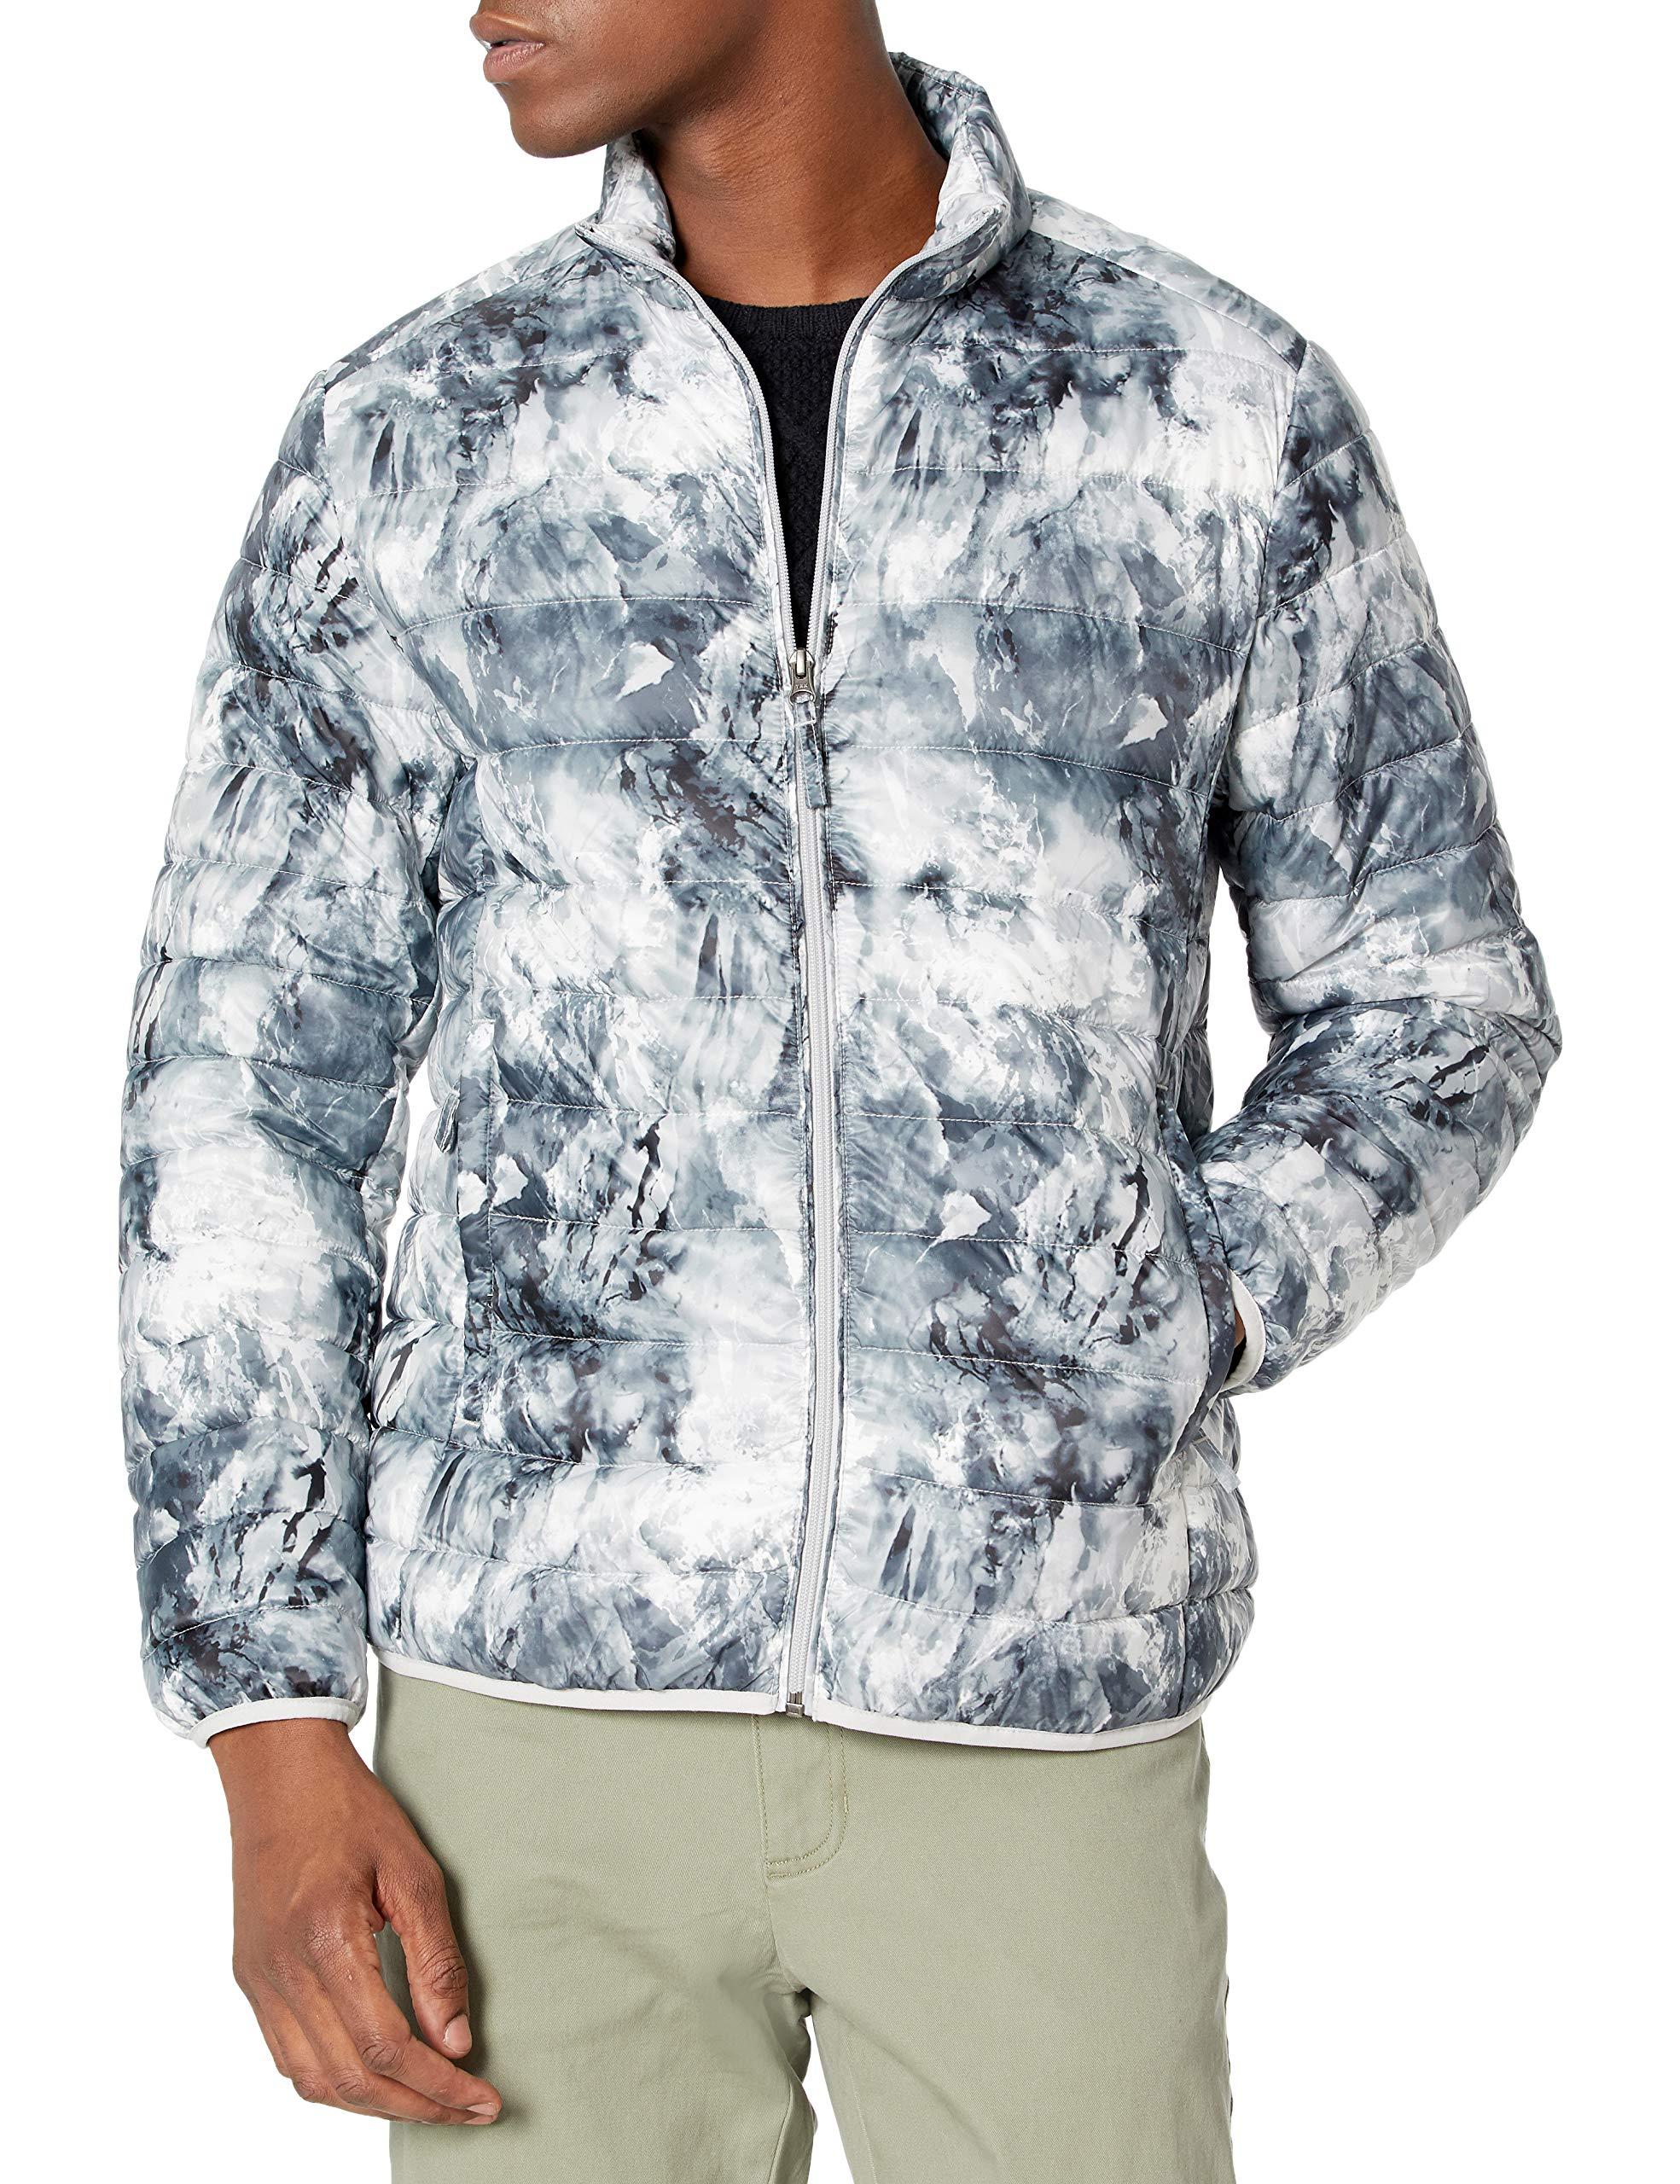 Essentials Men's Big & Tall Lightweight Water-Resistant Packable Puffer Jacket fit by DXL Sports & Outdoors